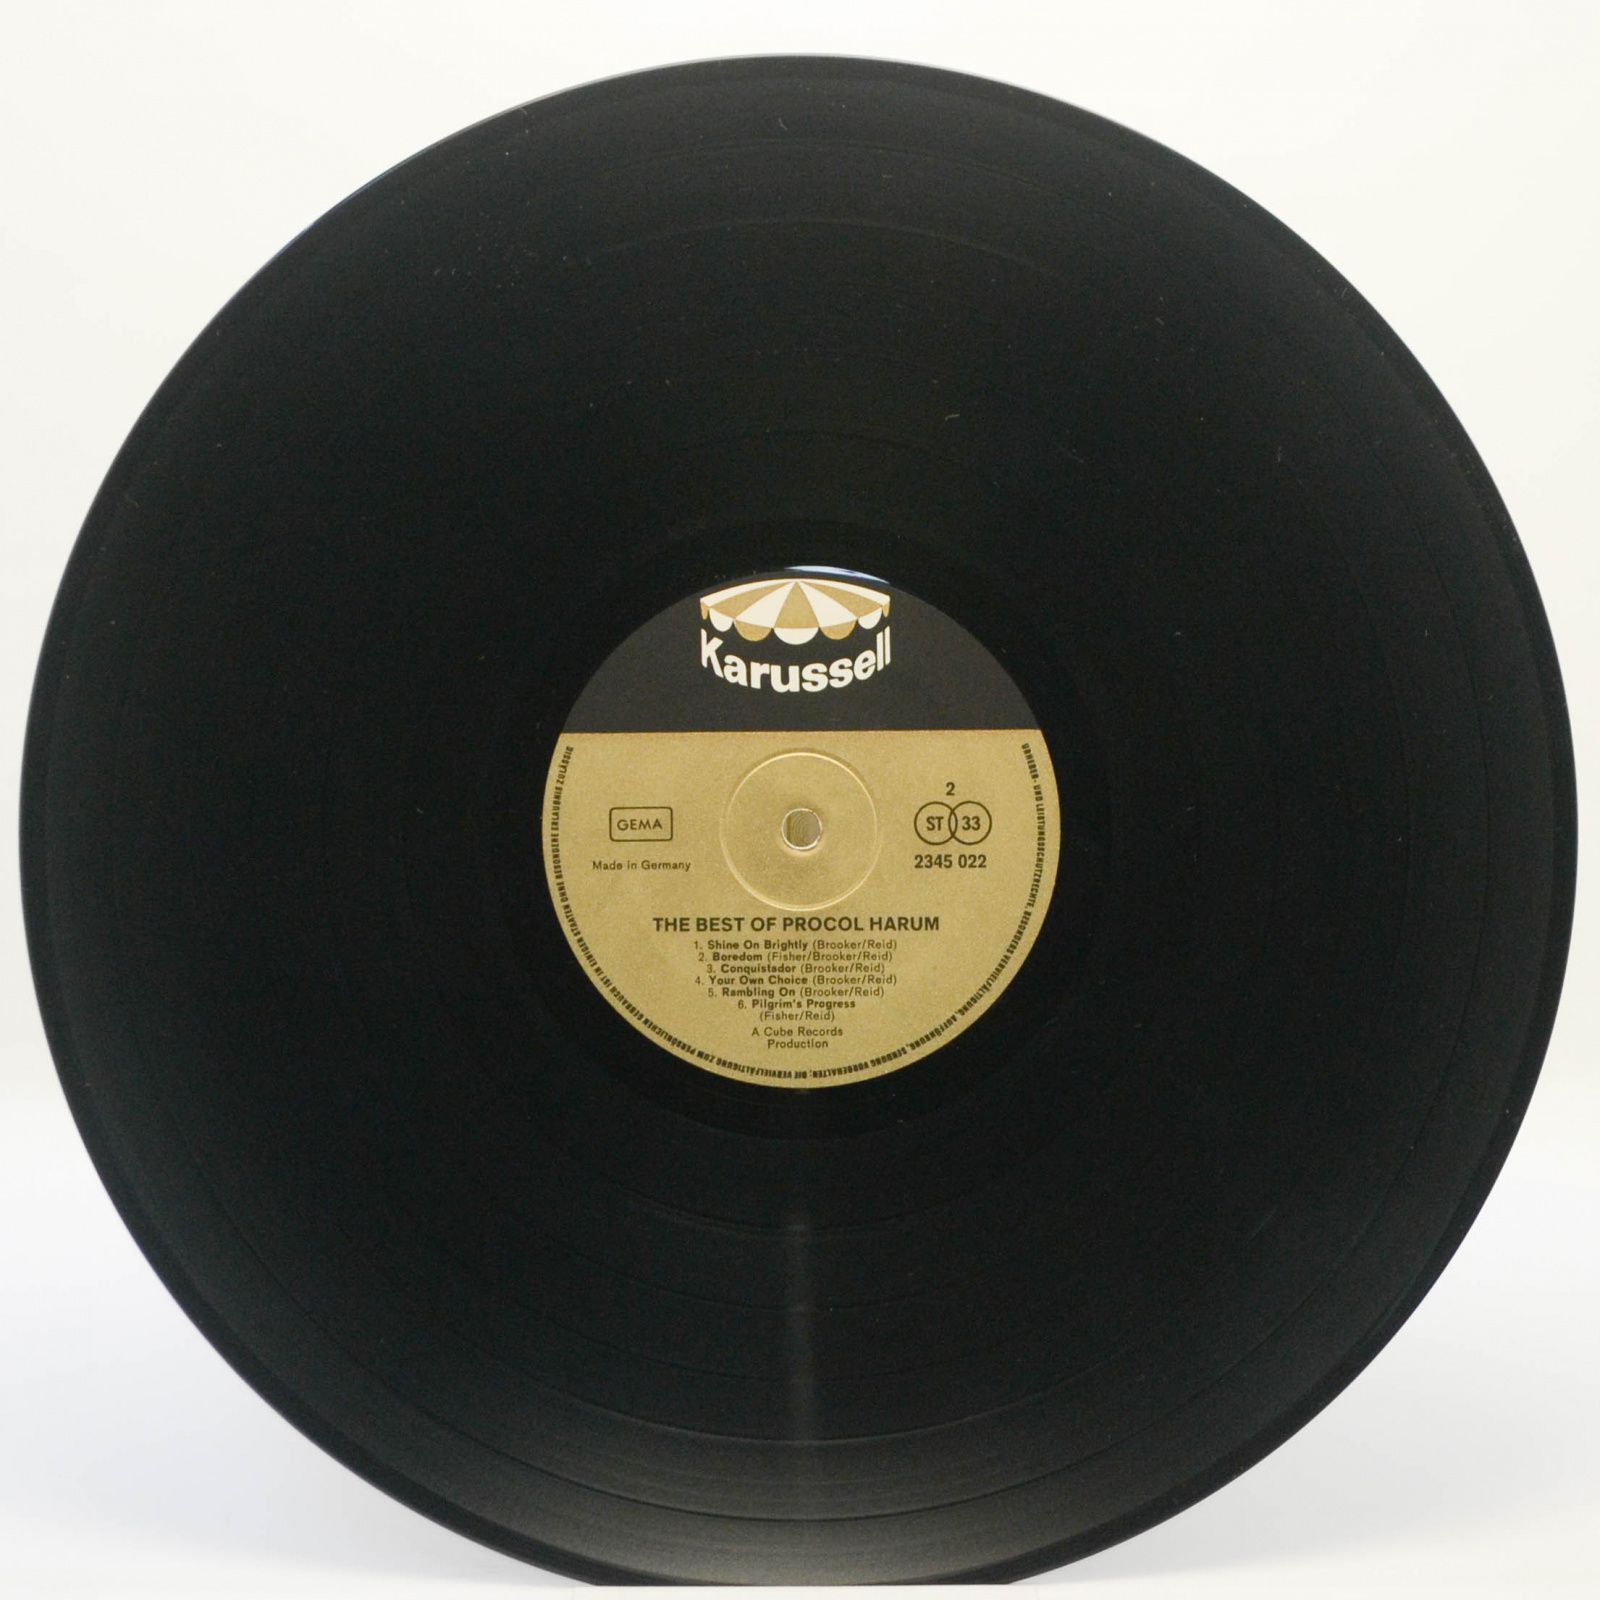 Procol Harum — The Best Of Procol Harum, 1971